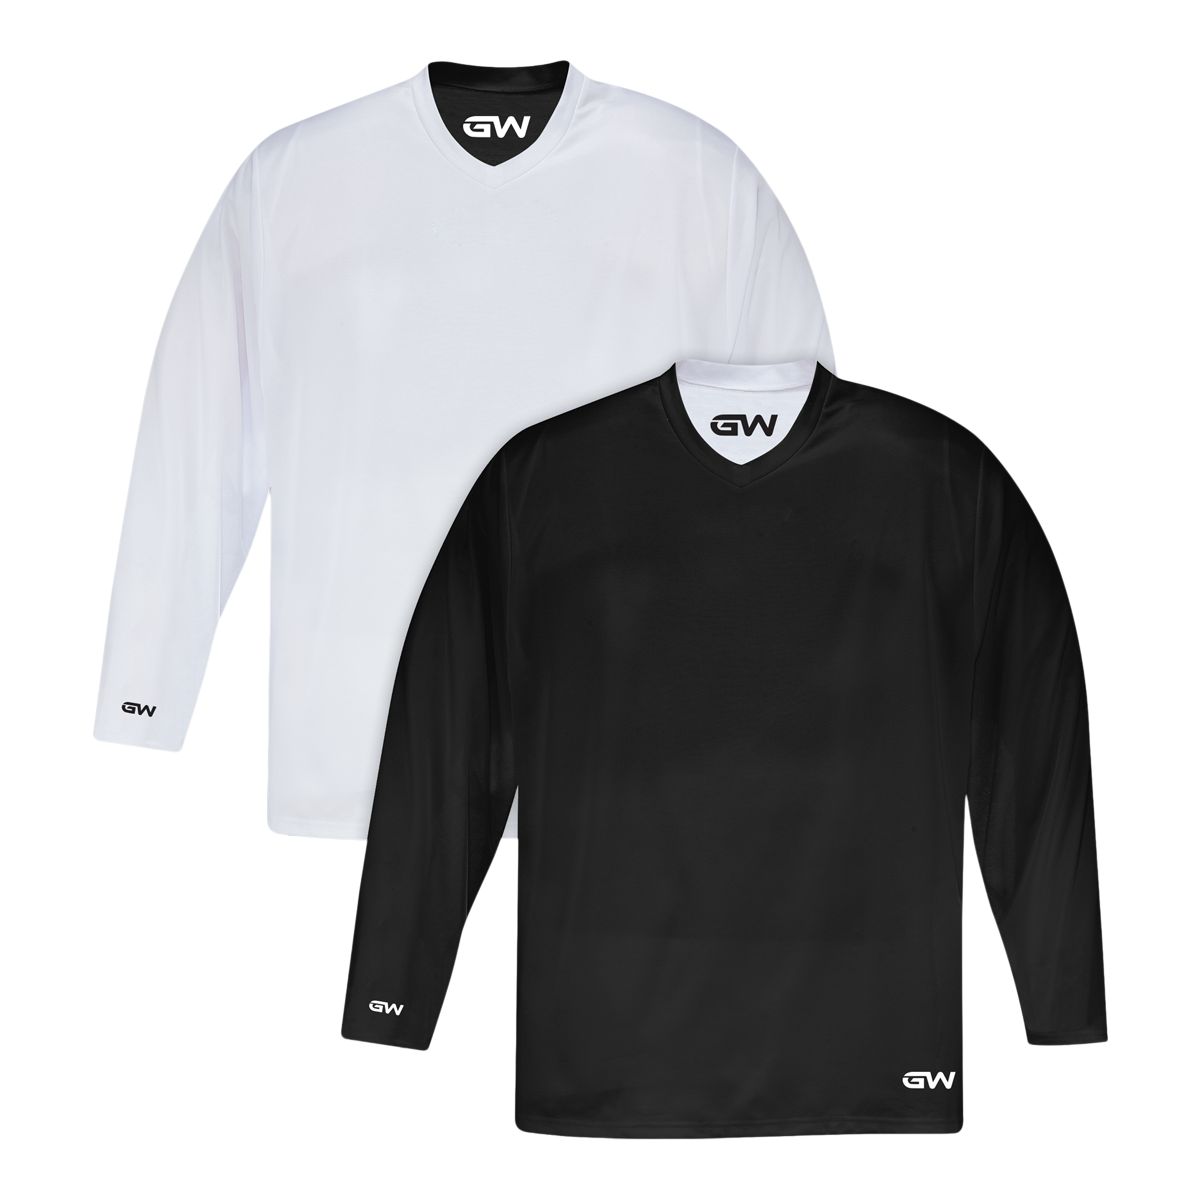  CCM 6000 Hockey Jersey, Senior (Small, Black/White